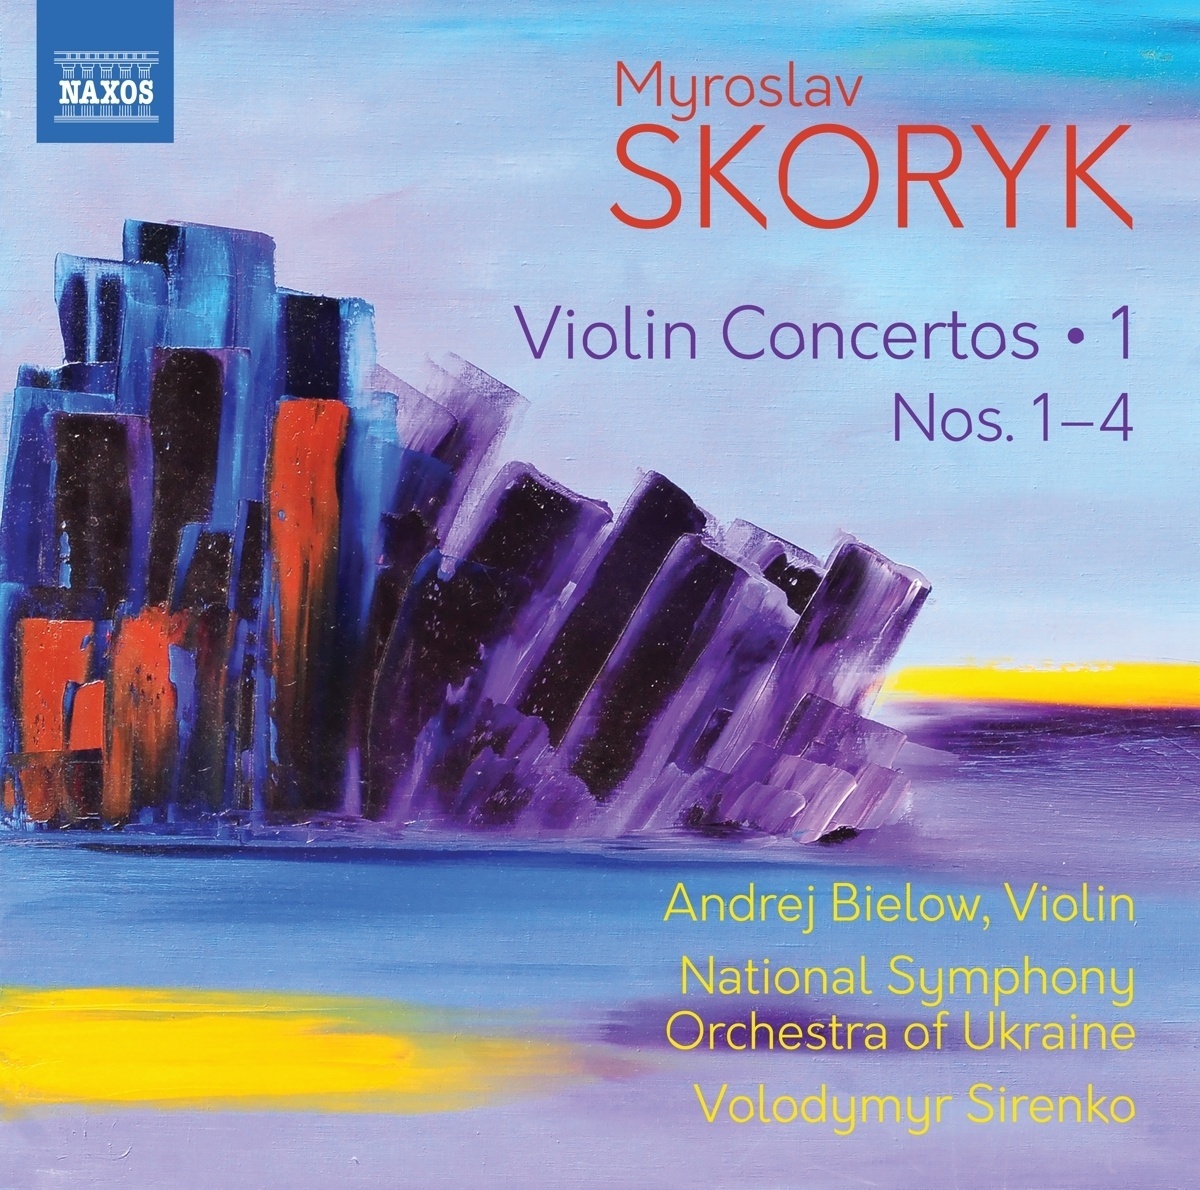 Violinkonzerte Vol.1 - Andrej Bielow  Volodymyr Sirenko  NSO of Ukraine. (CD)